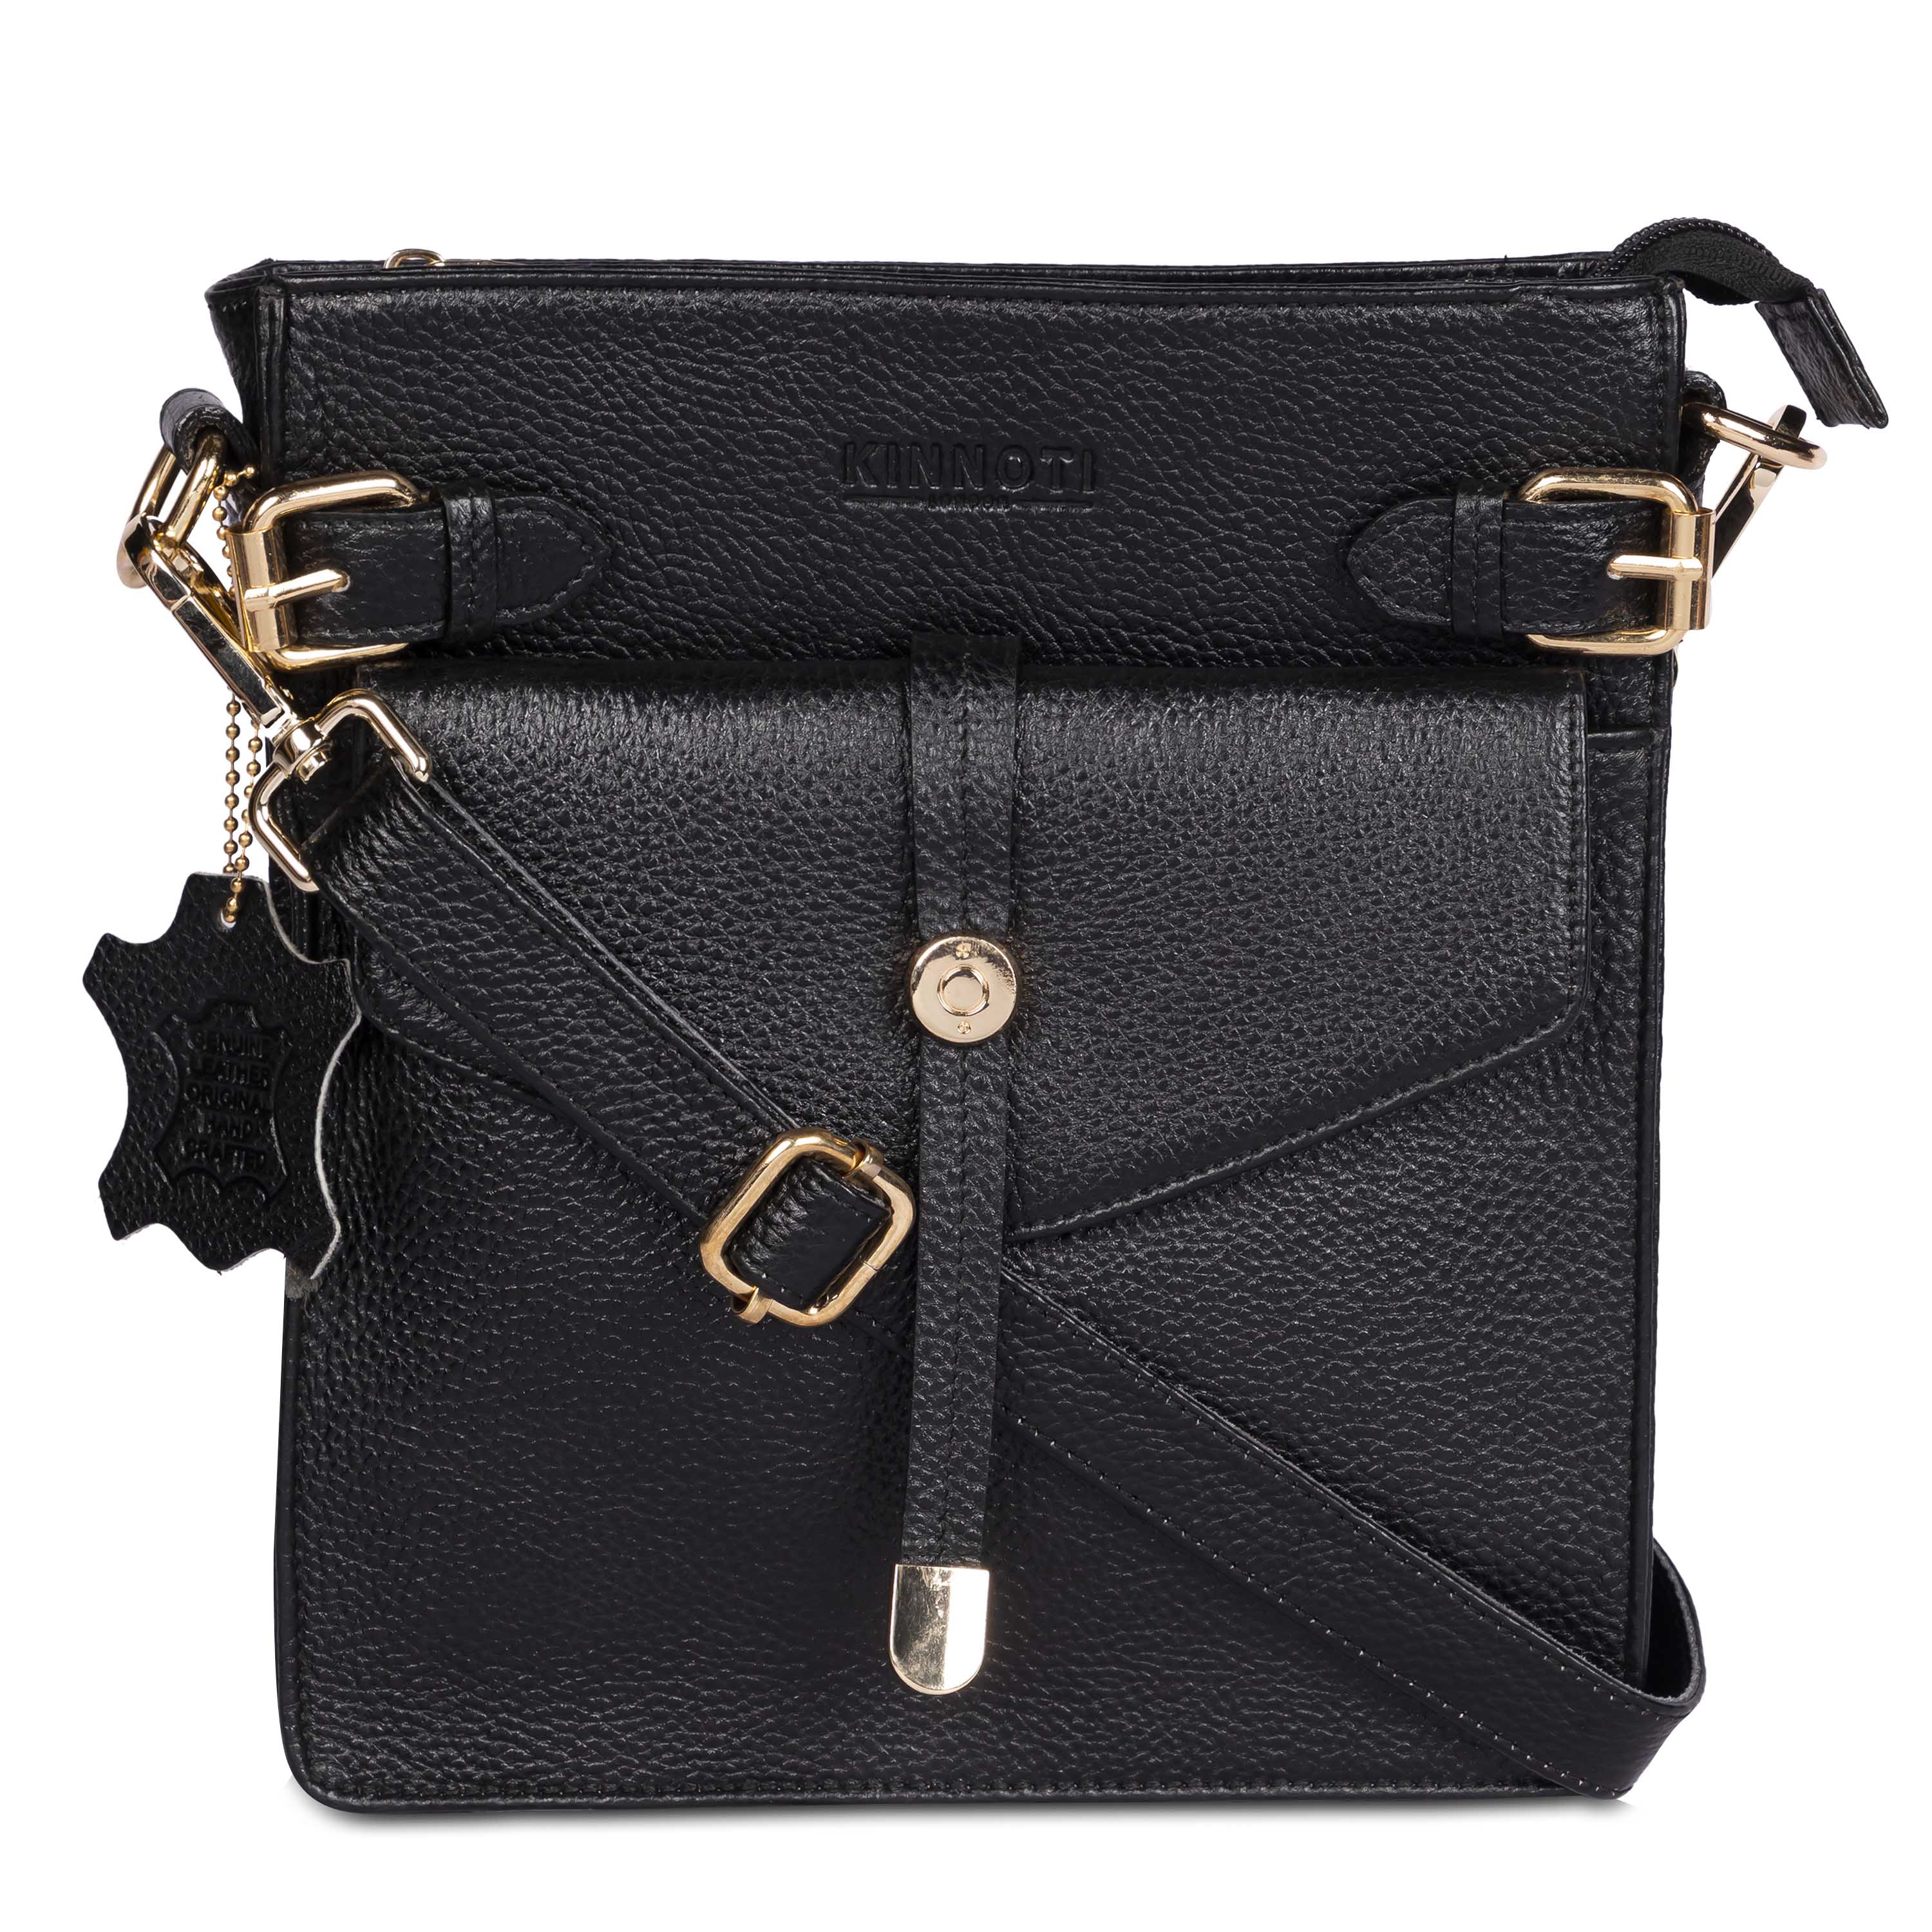 kinnoti Leather sling bag Black Genuine Leather Sling Bag